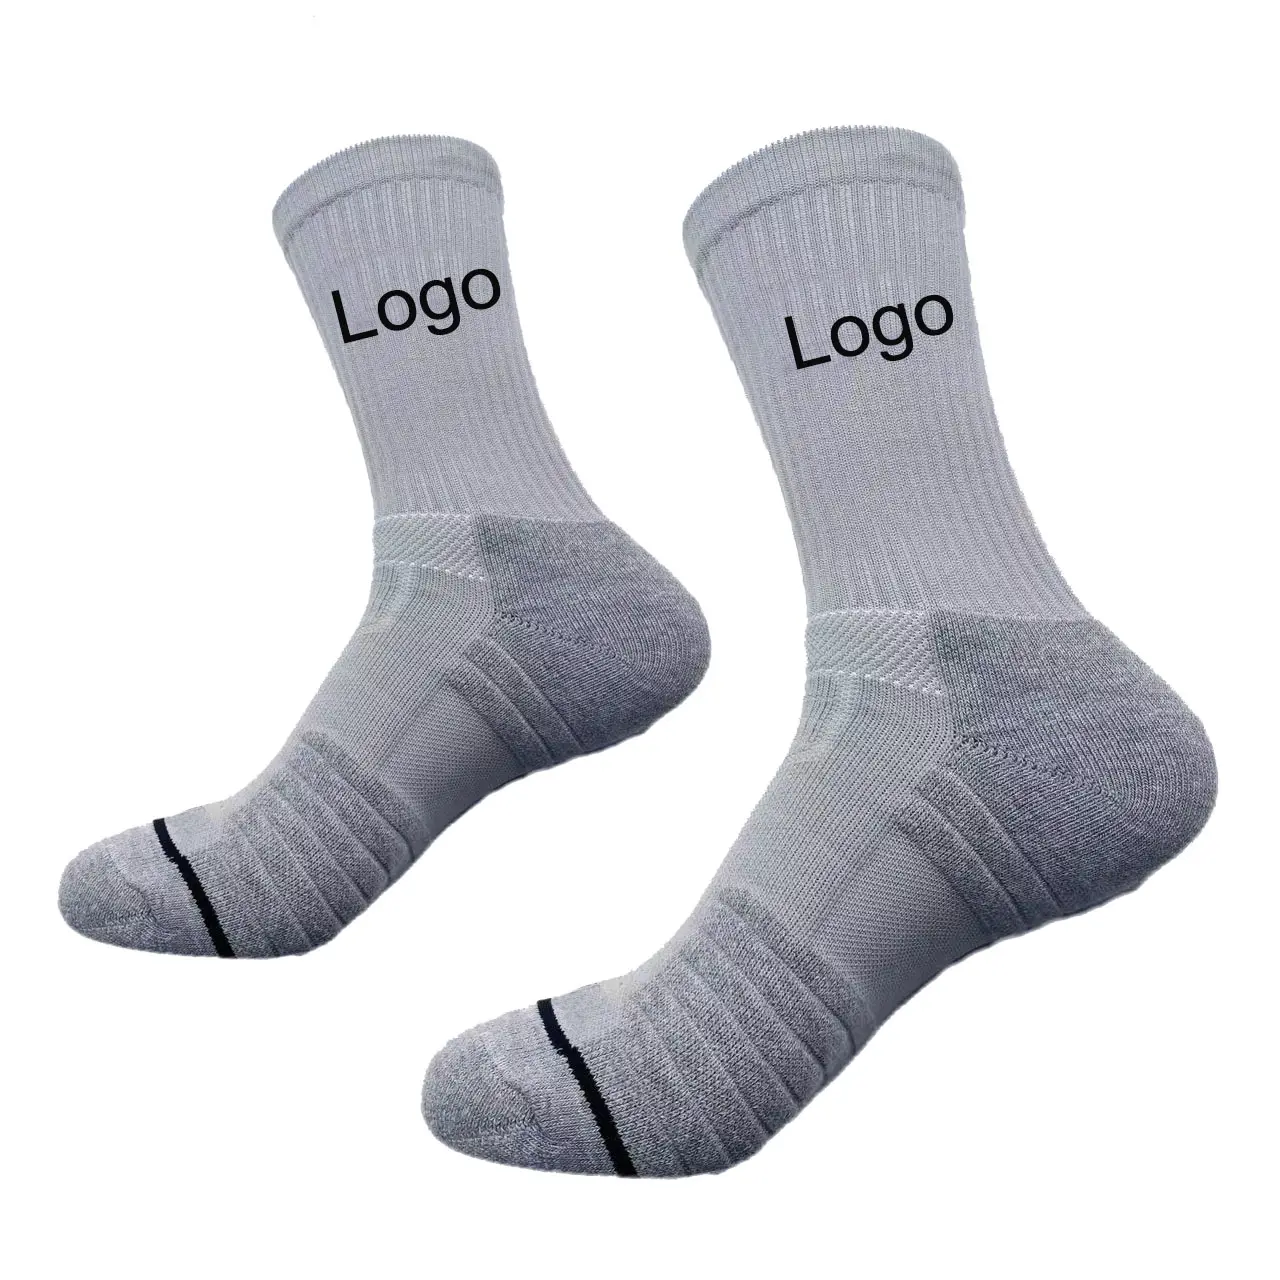 High Quality Compression Sport Custom Design Crew Socks Unisex Athletic Sports Colorful Sports Socks